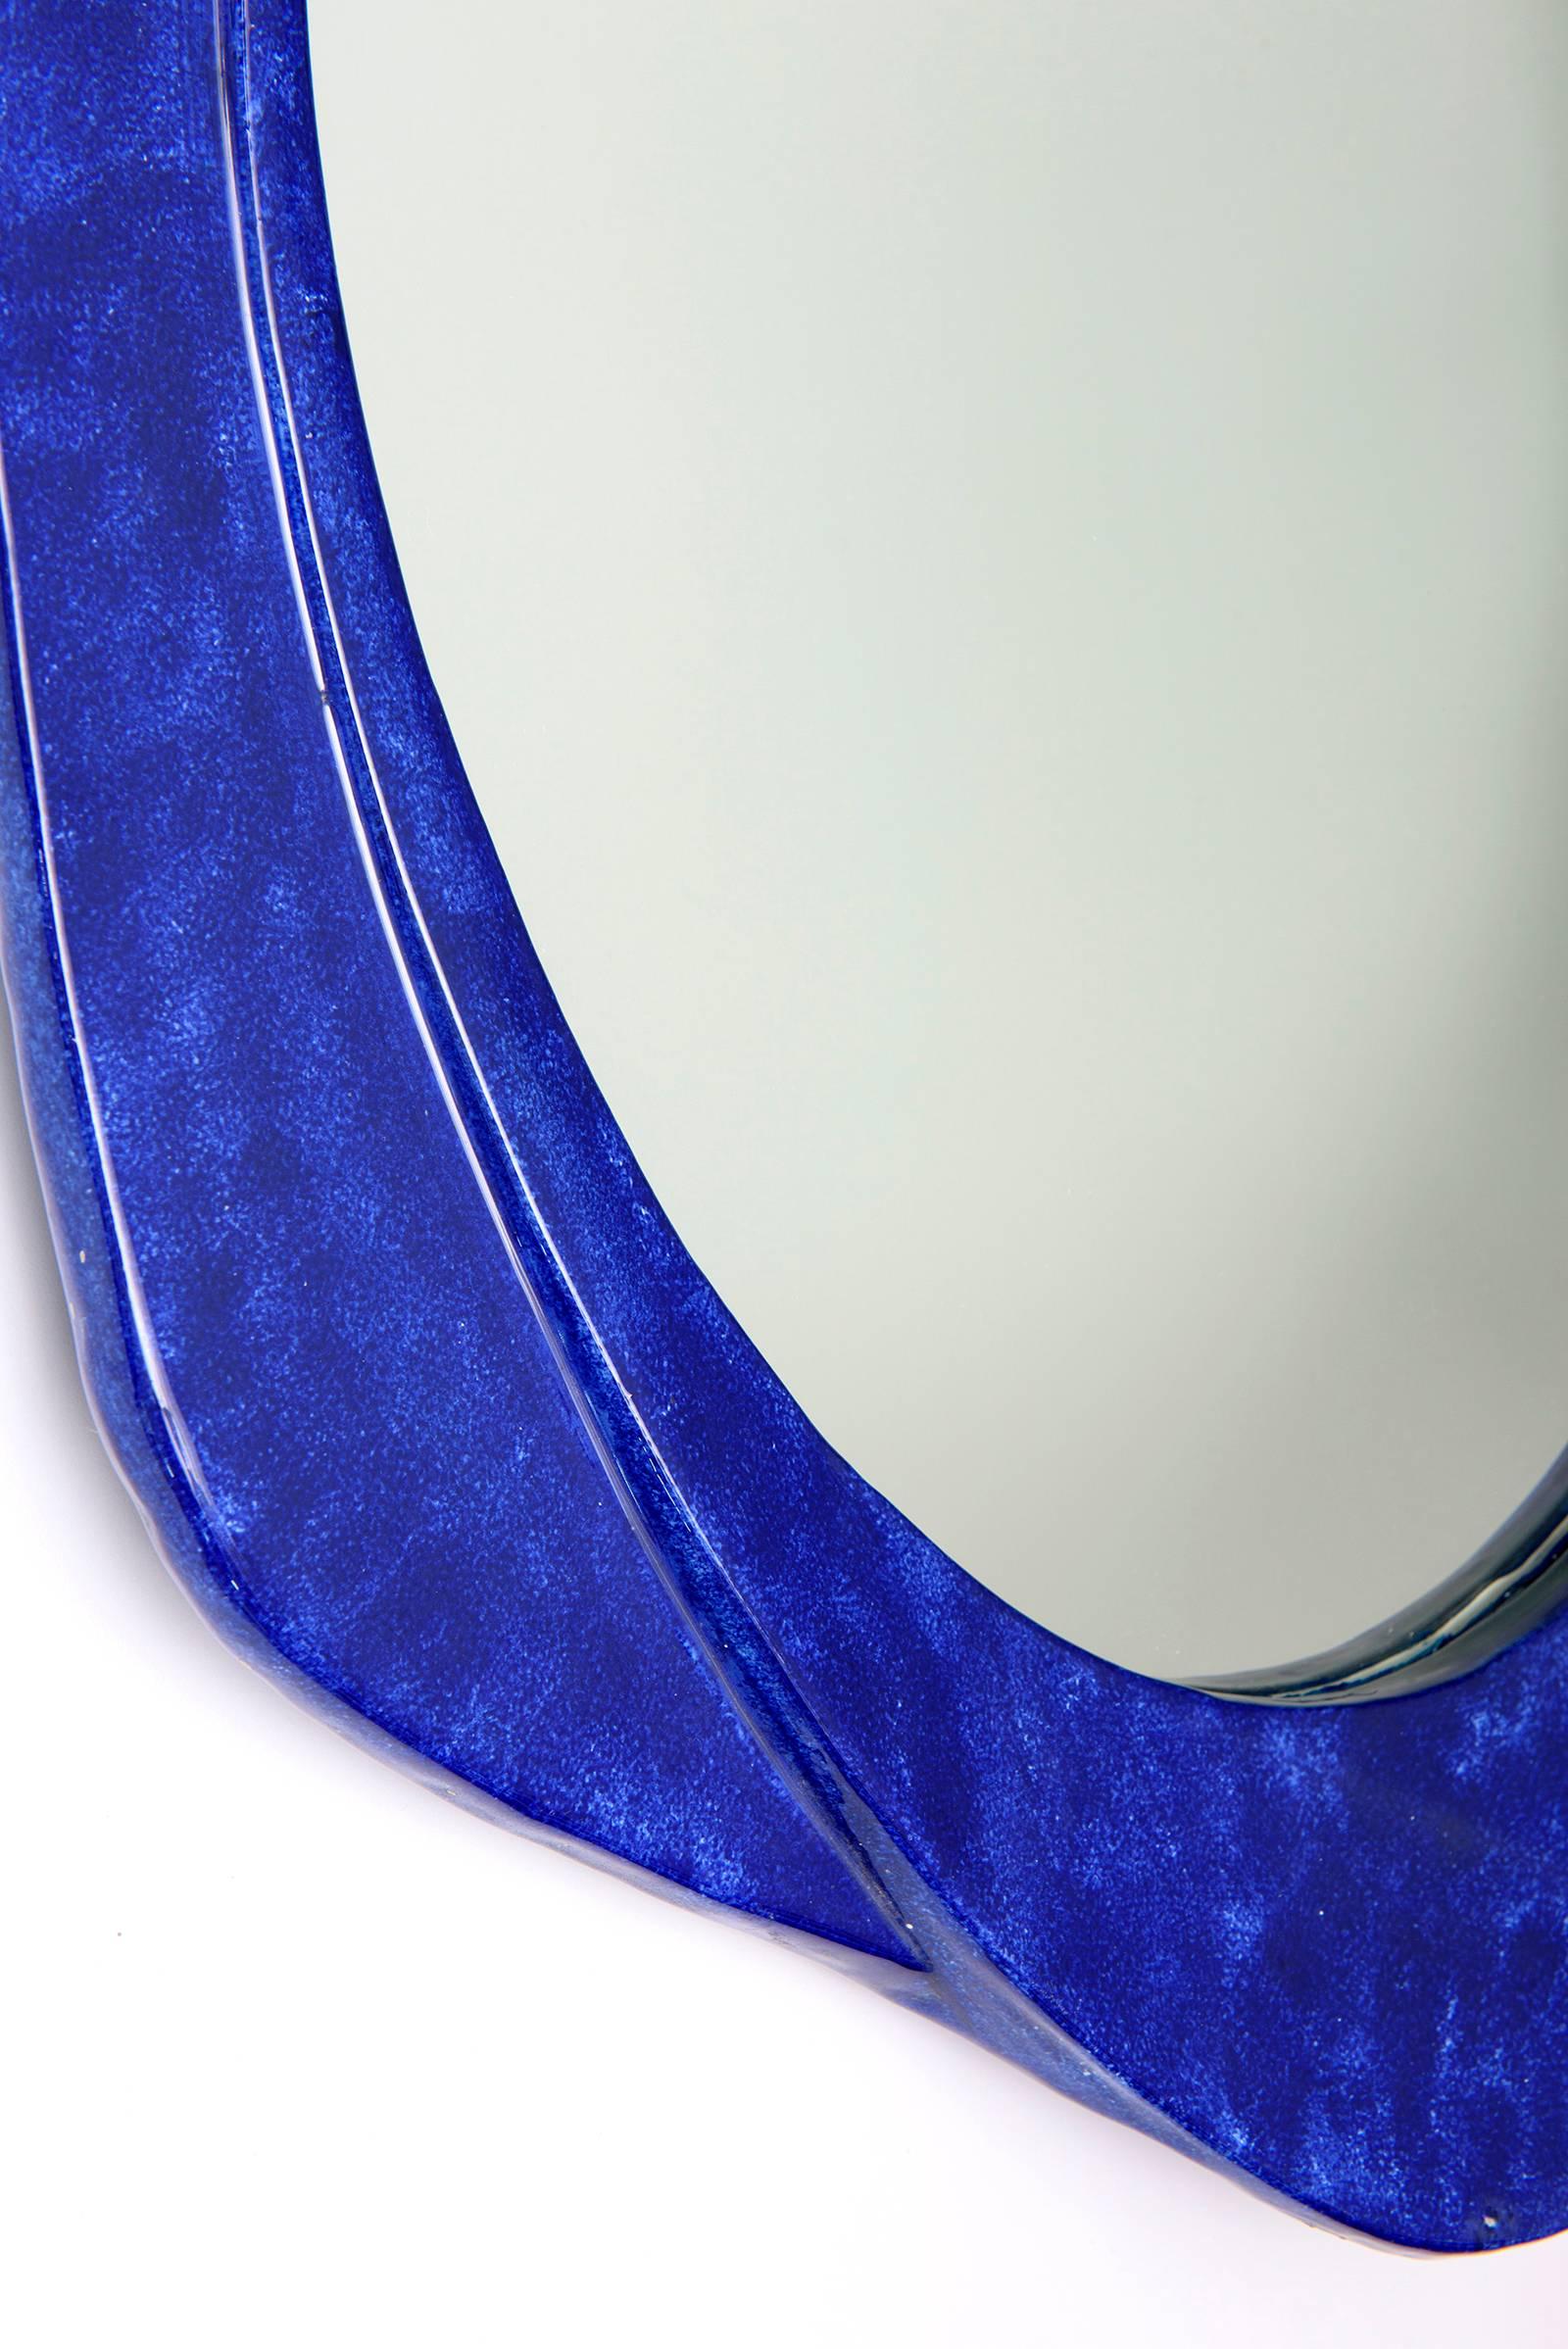 Italian wall mirror with beautiful royal blue mottled glazed ceramic frame.